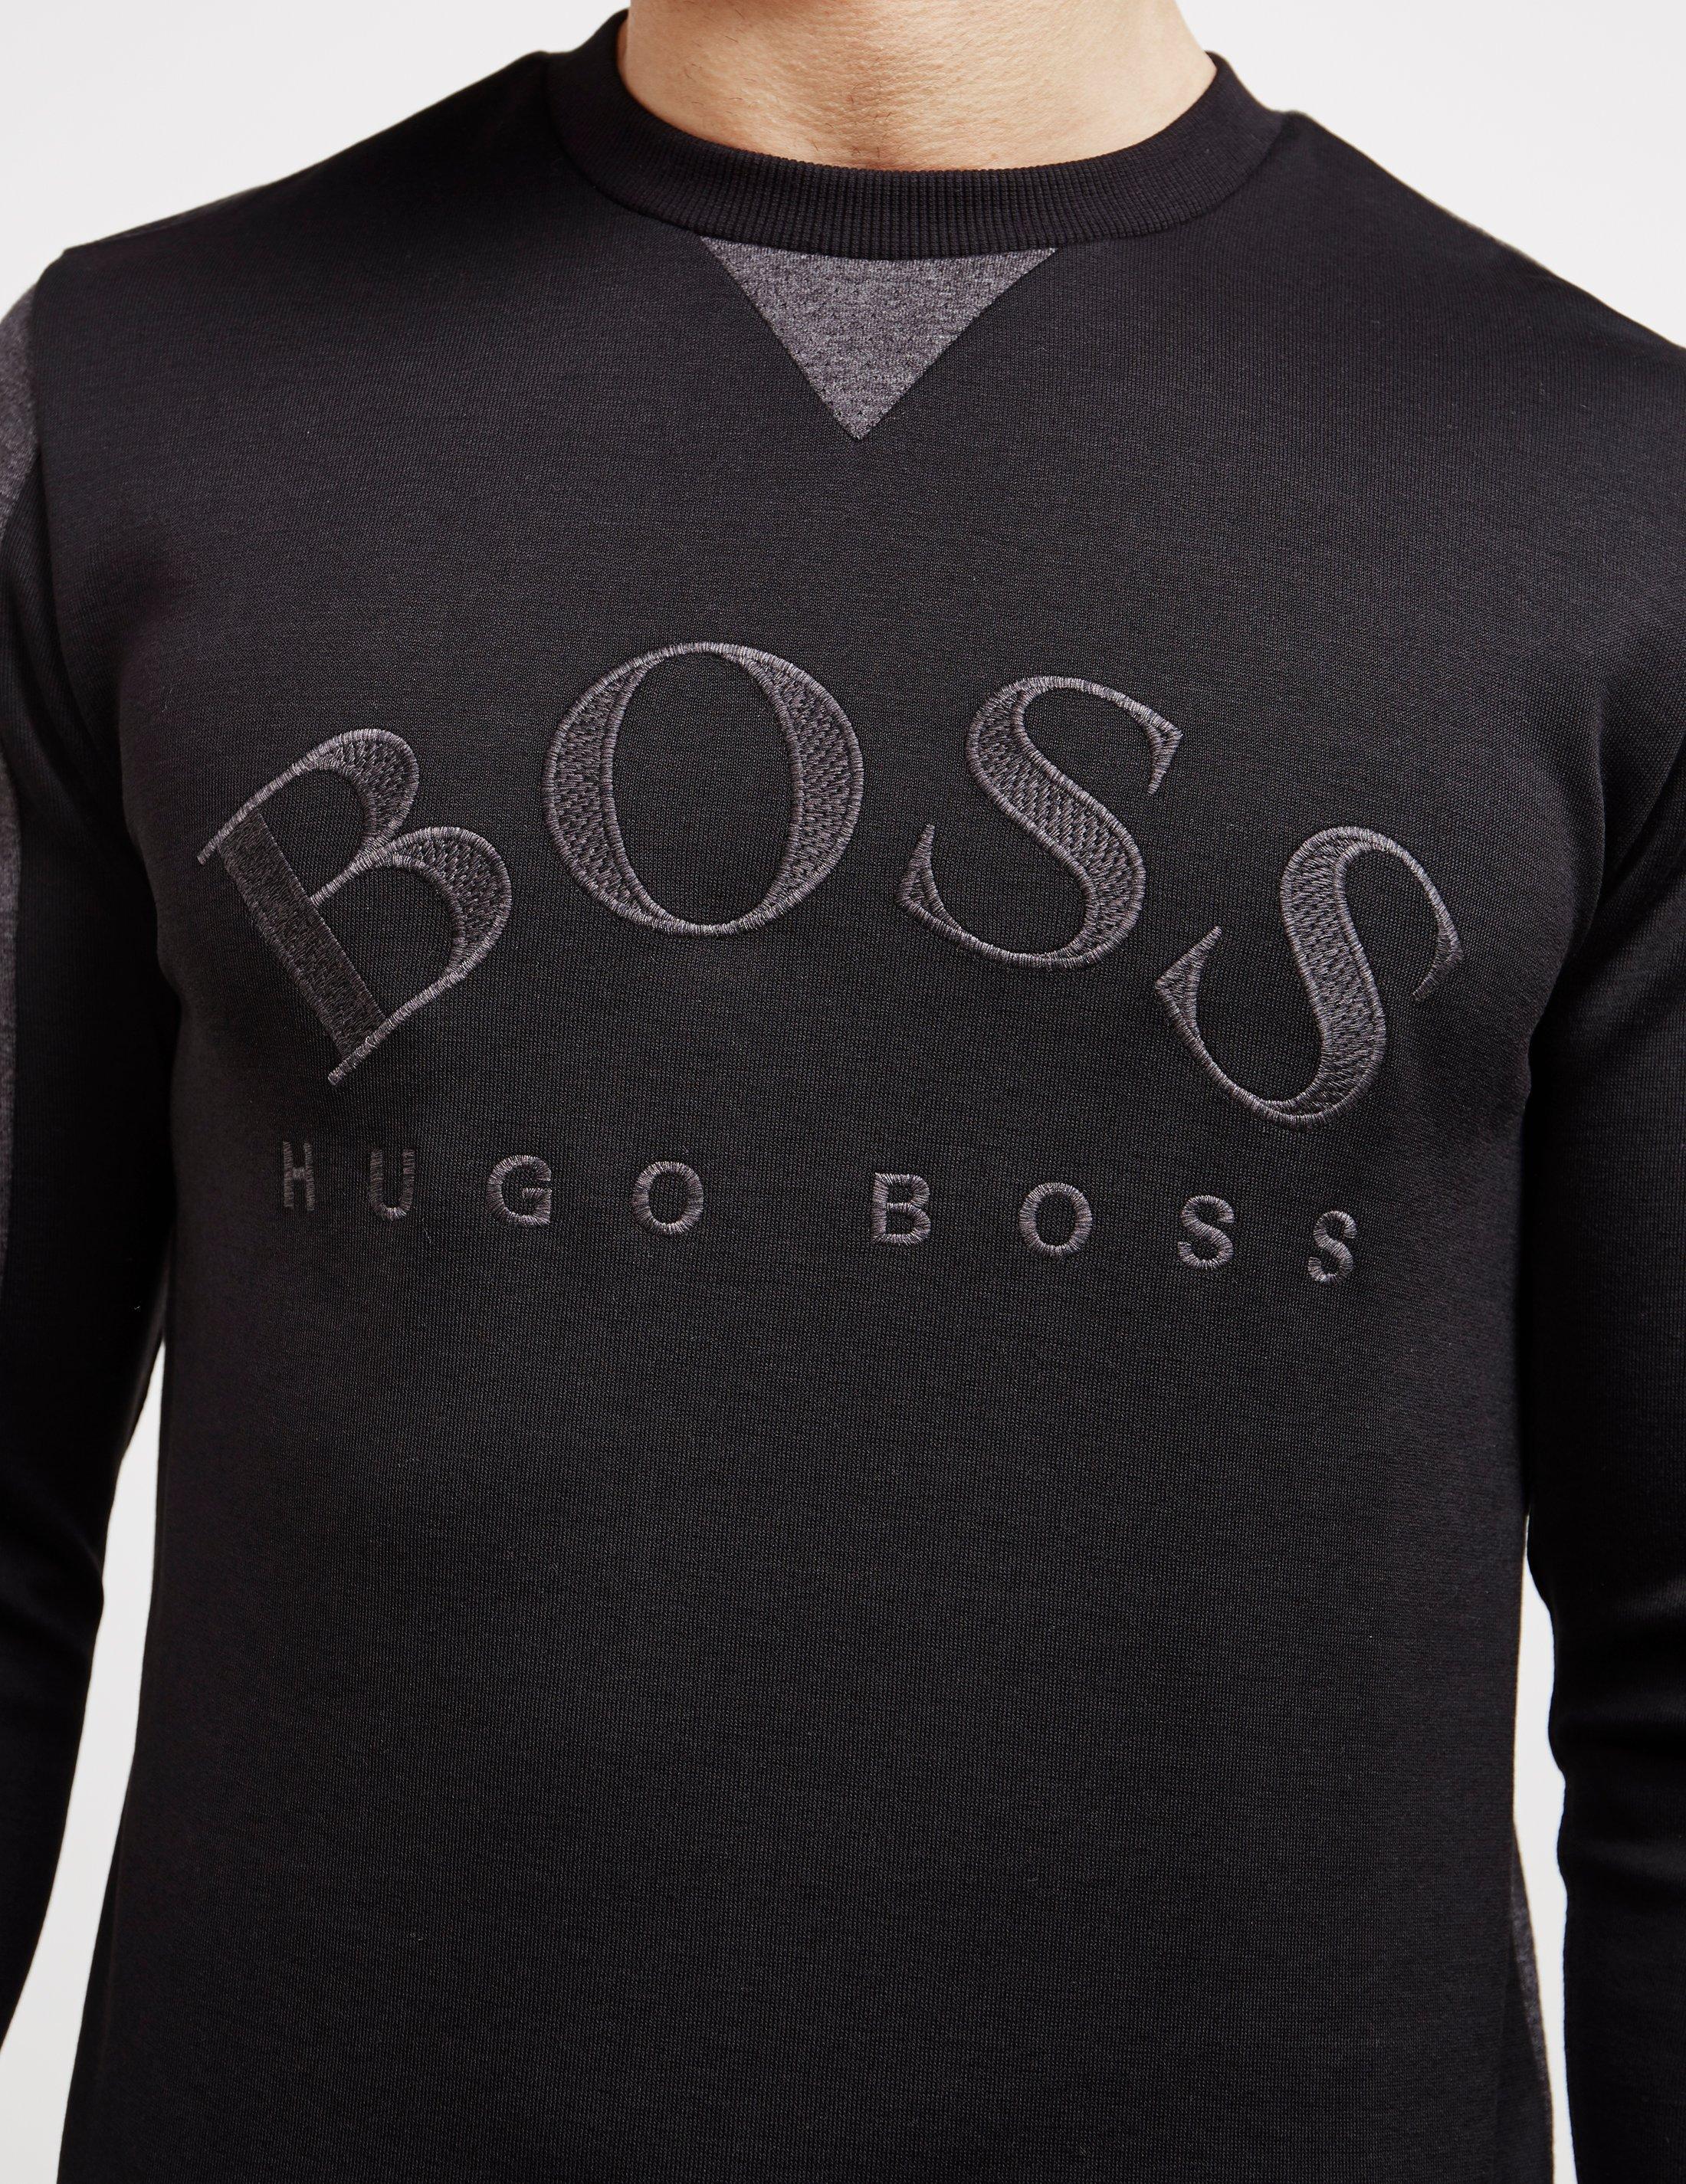 boss black sweater